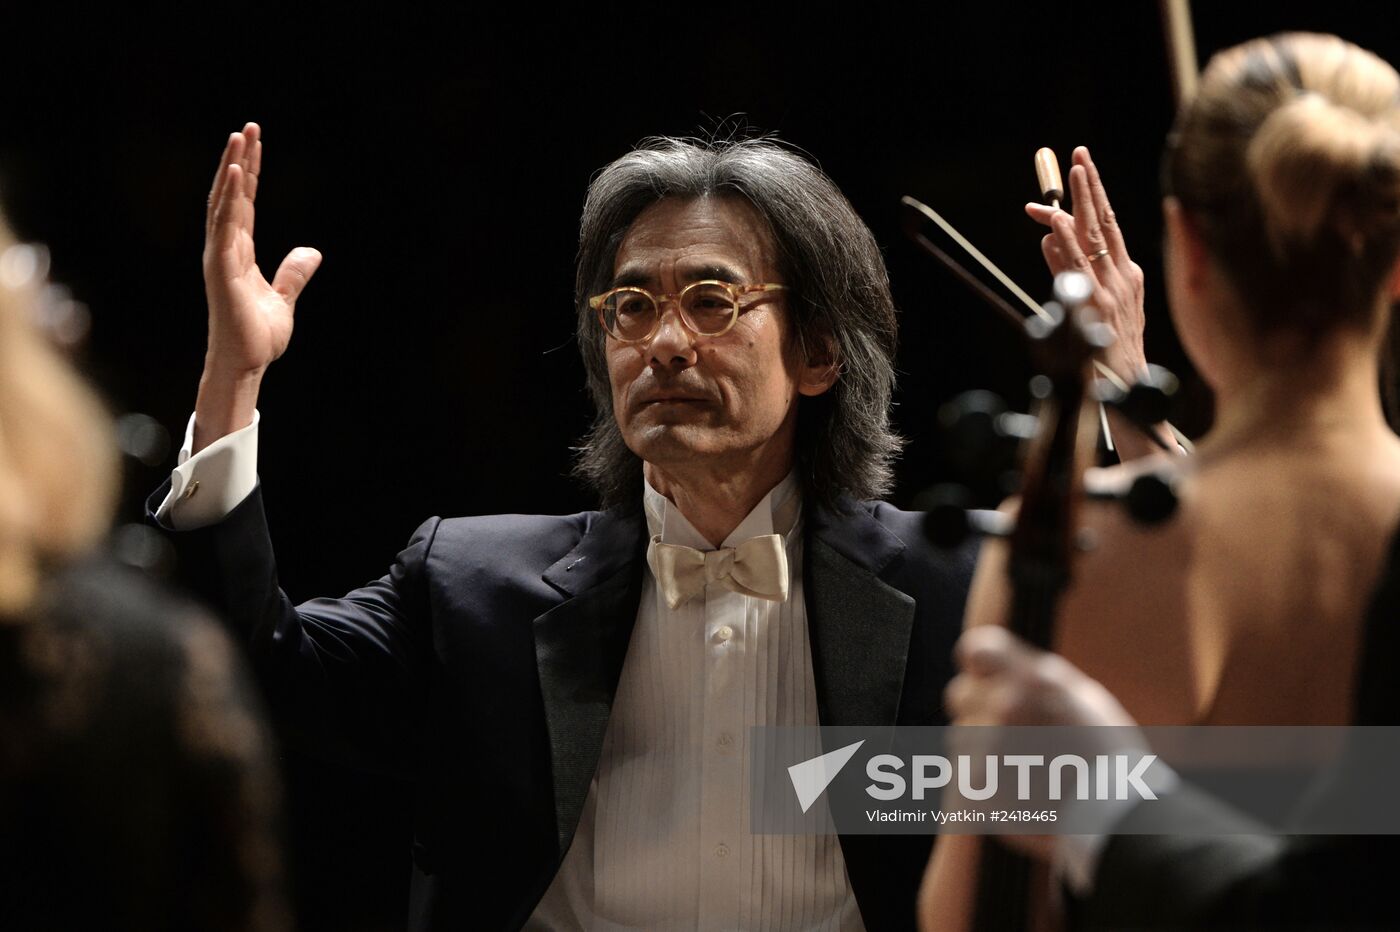 Concert by conductor Kent Nagano